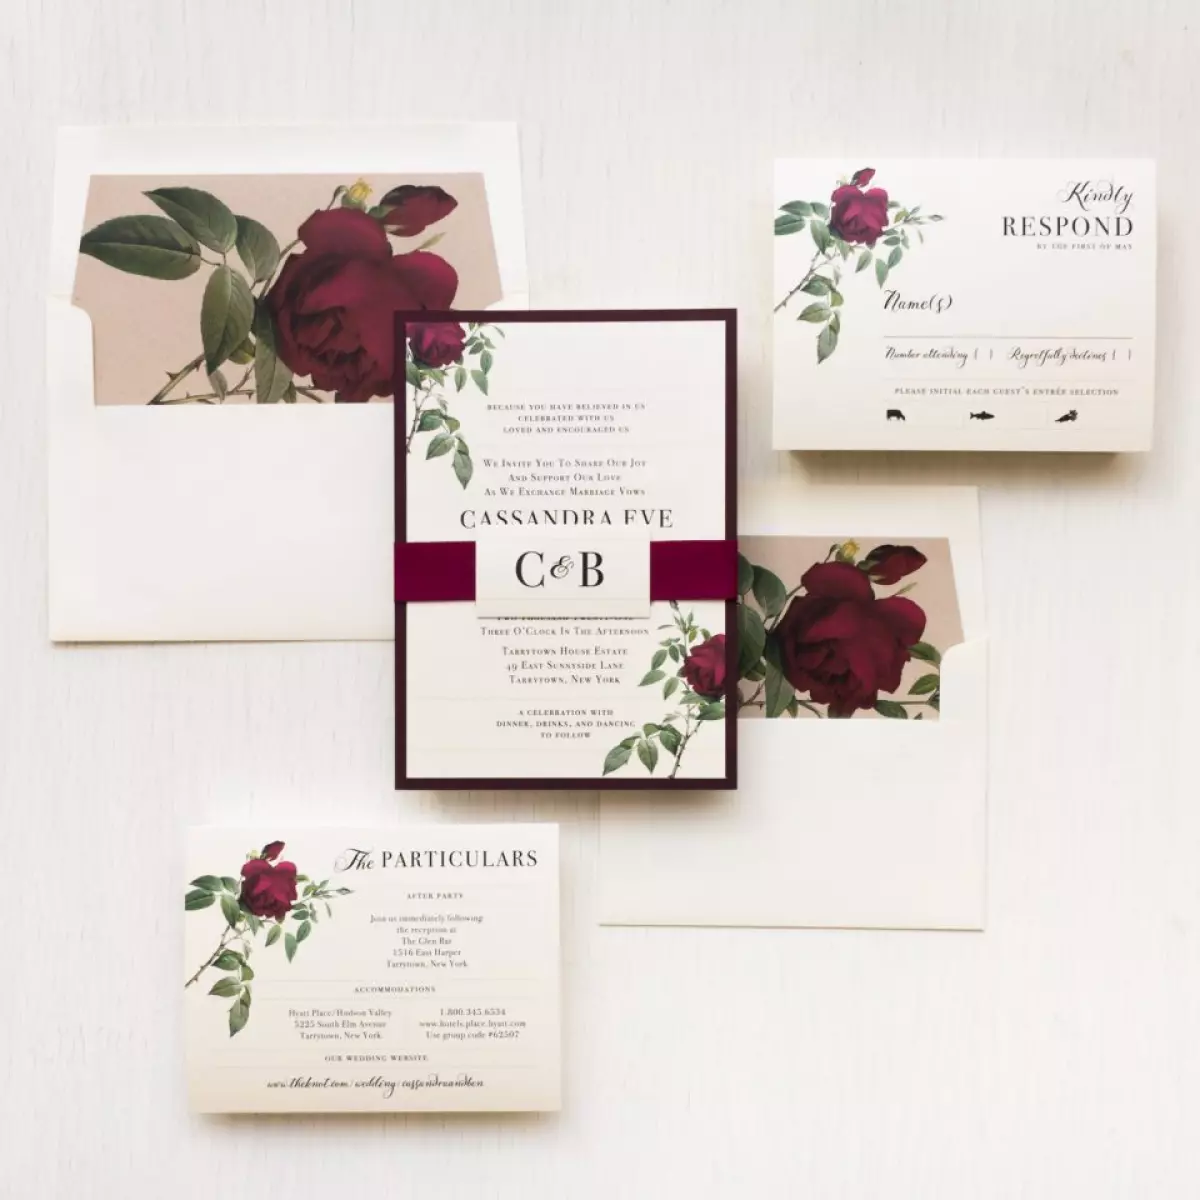 Ivory & Burgundy Floral Wedding Invitations